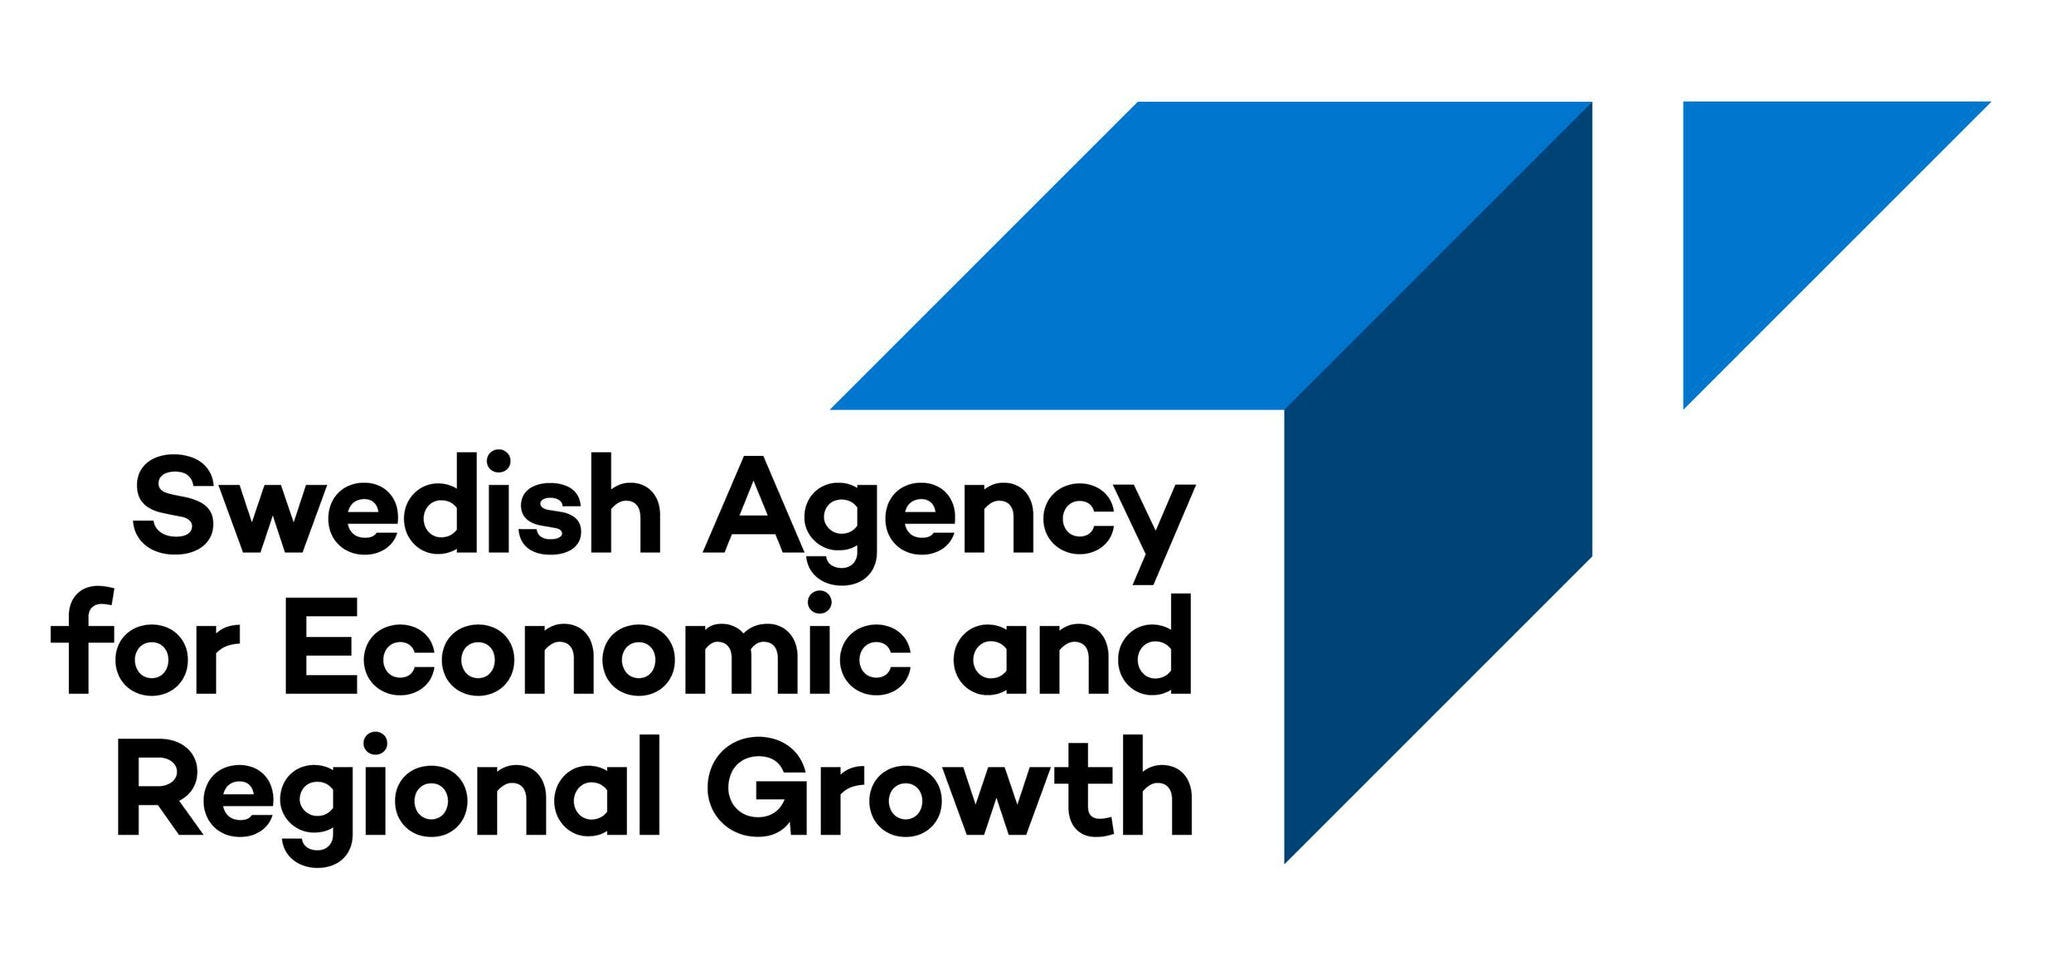 Swedish Agency for Economic and Regional Growth logo